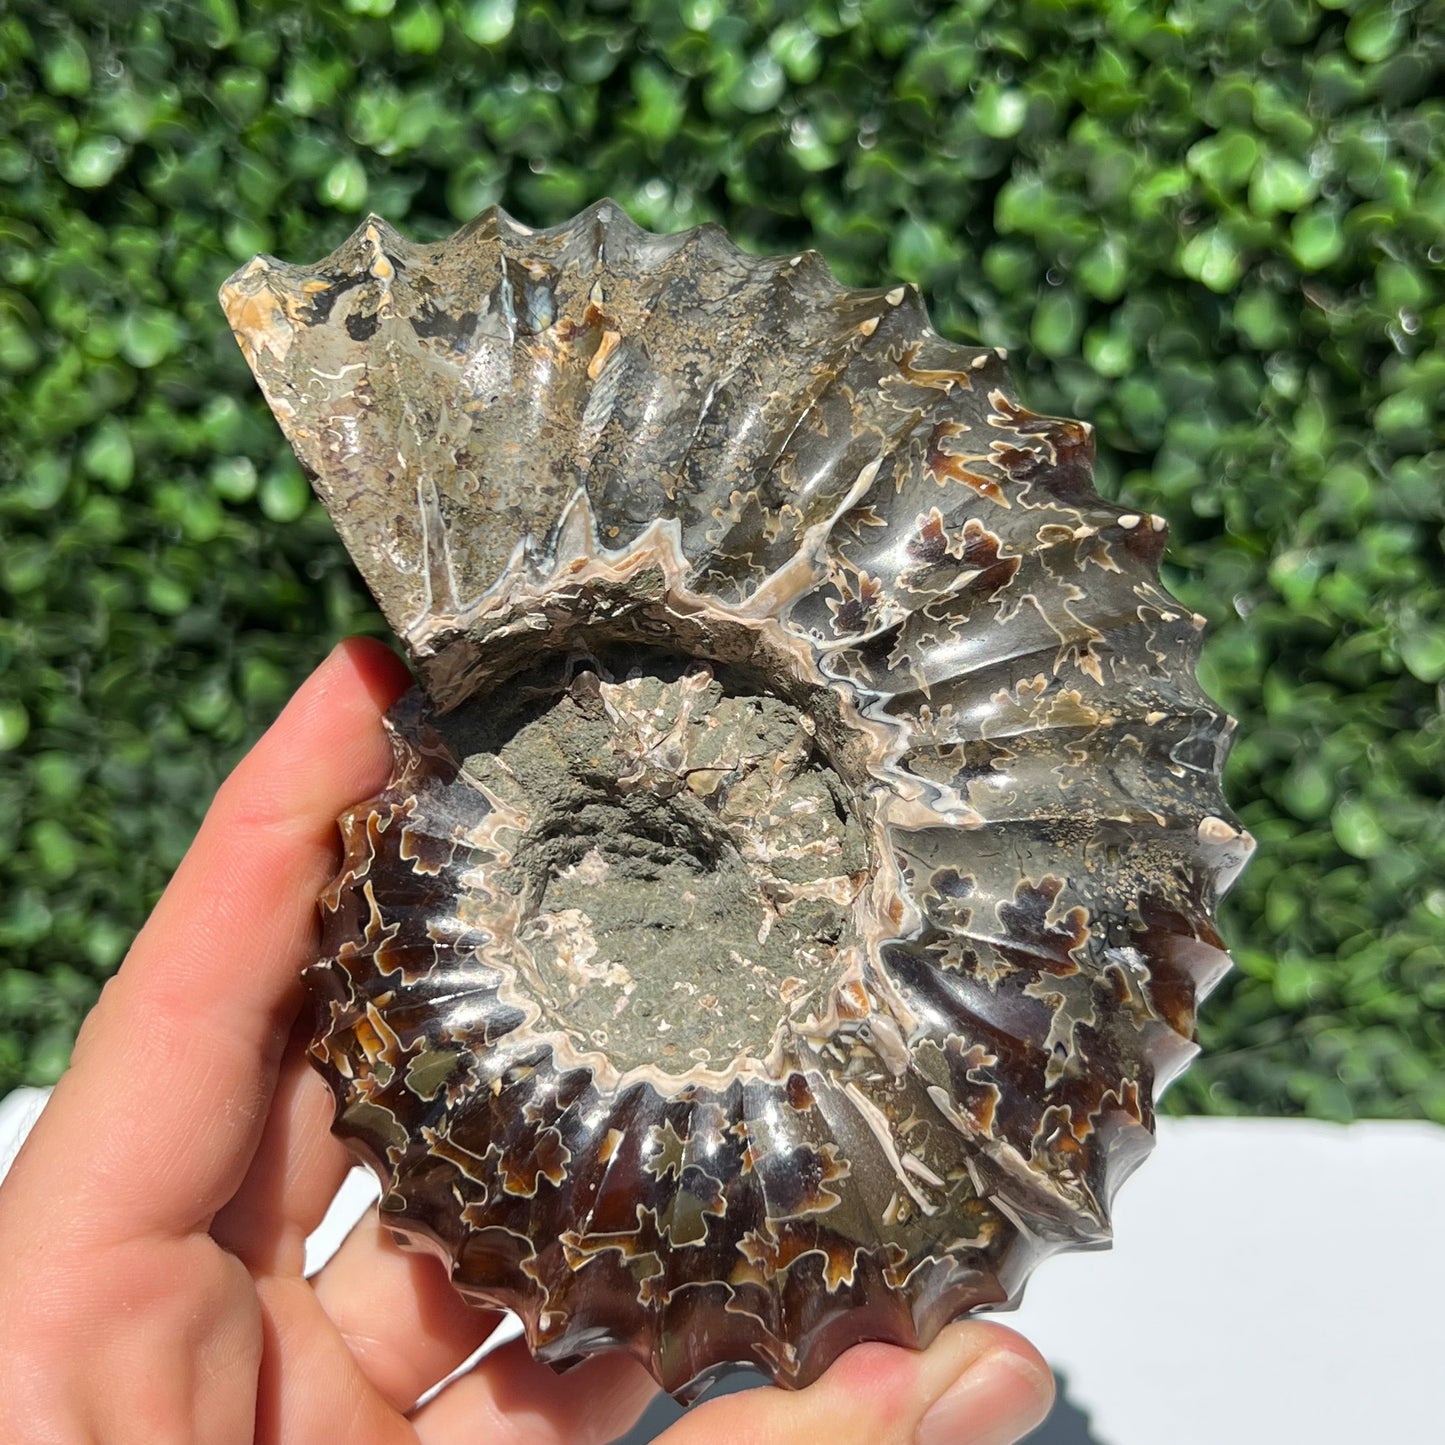 Nautilus Fossil Shell